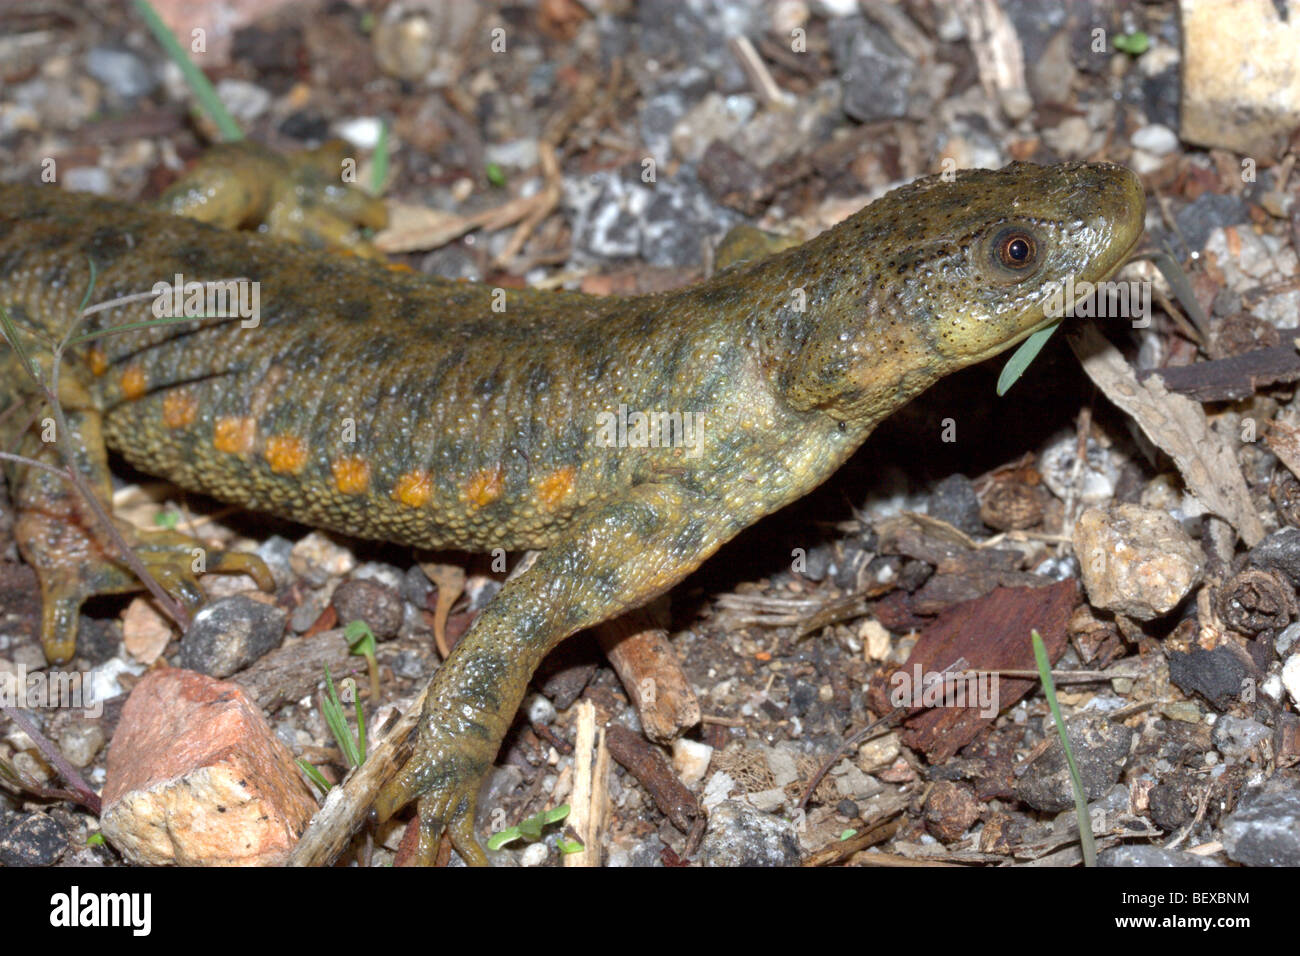 Iberian ribbed newt or Spanish ribbed newt (Pleurodeles waltl) Stock Photo